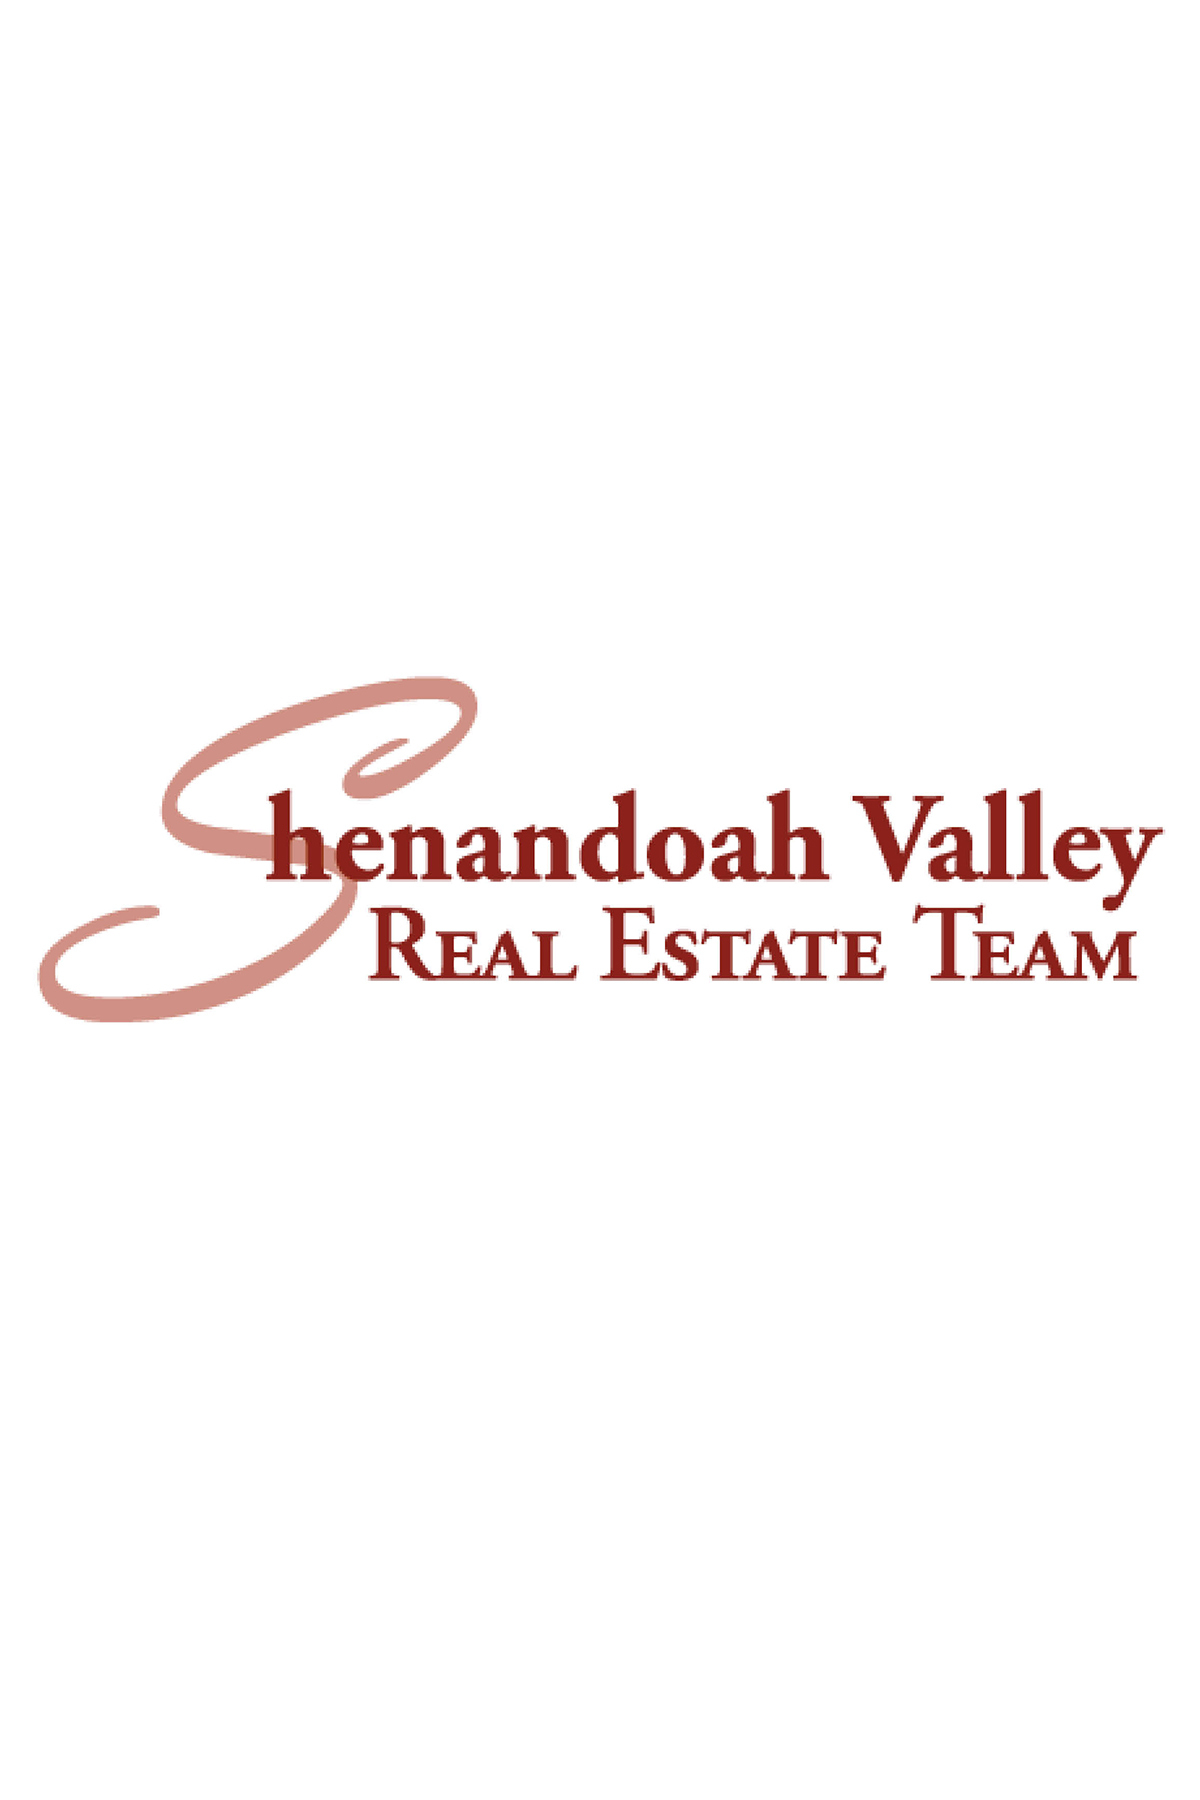 Shenandoah Valley Real Estate Team, Realtor® in Harrisonburg, Kline May Realty